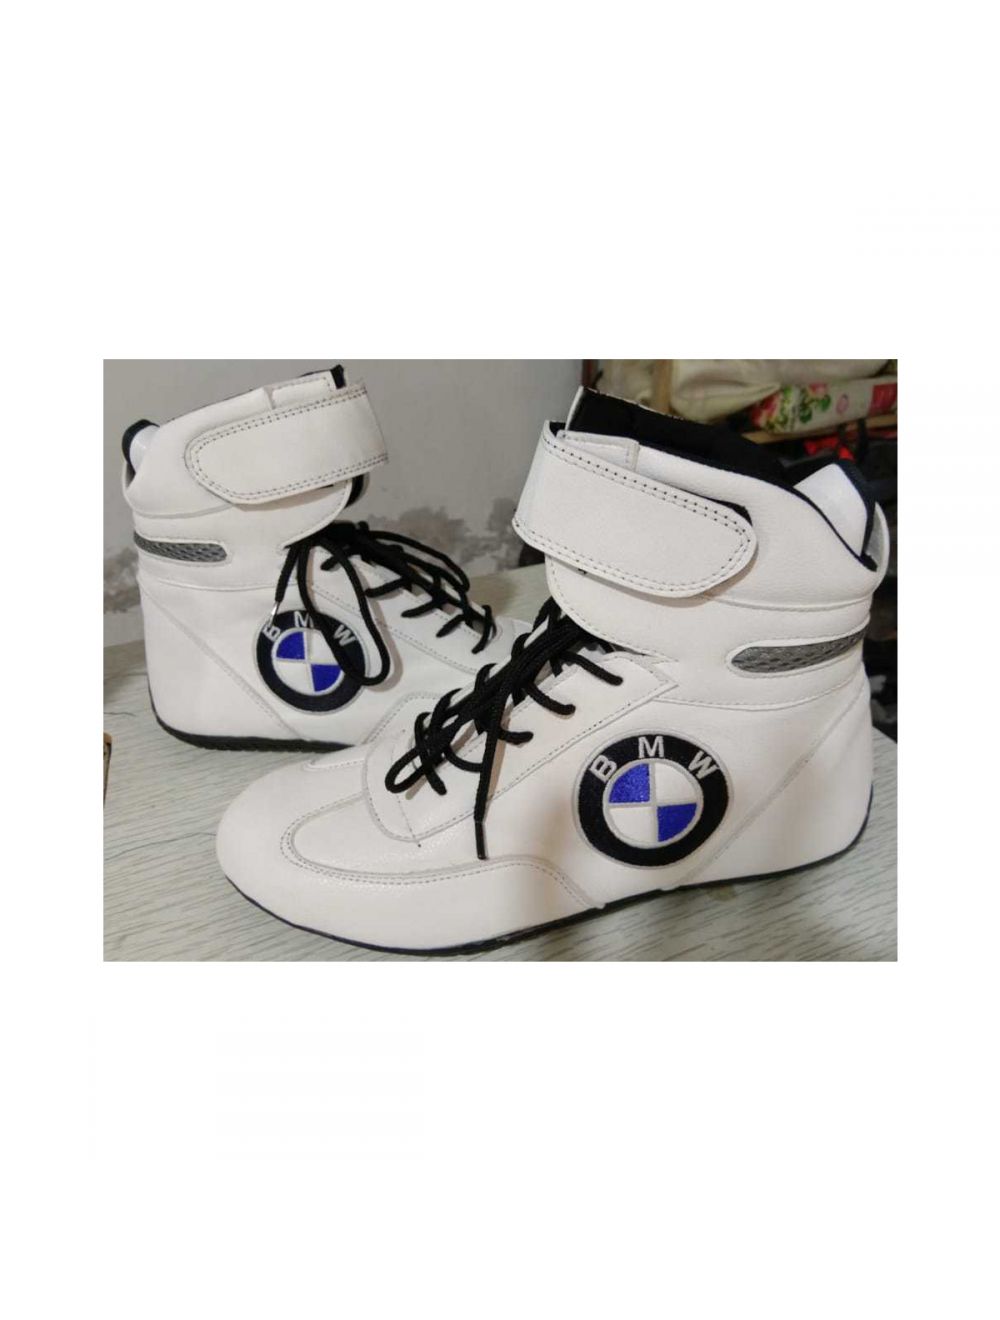 bmw white shoes